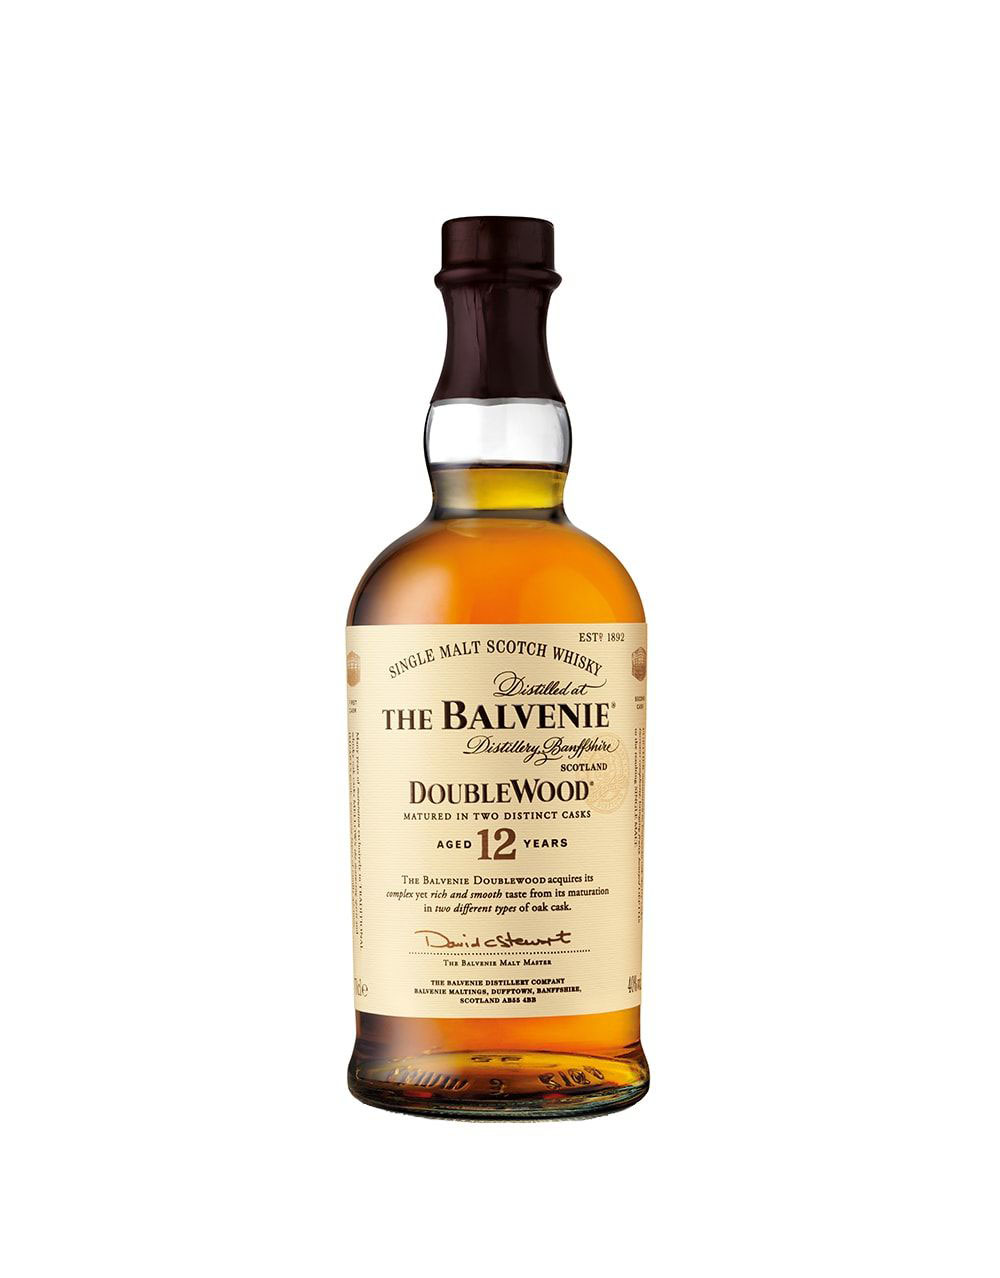 The Balvenie DoubleWood Aged 12 Years Single Malt Scotch Whisky